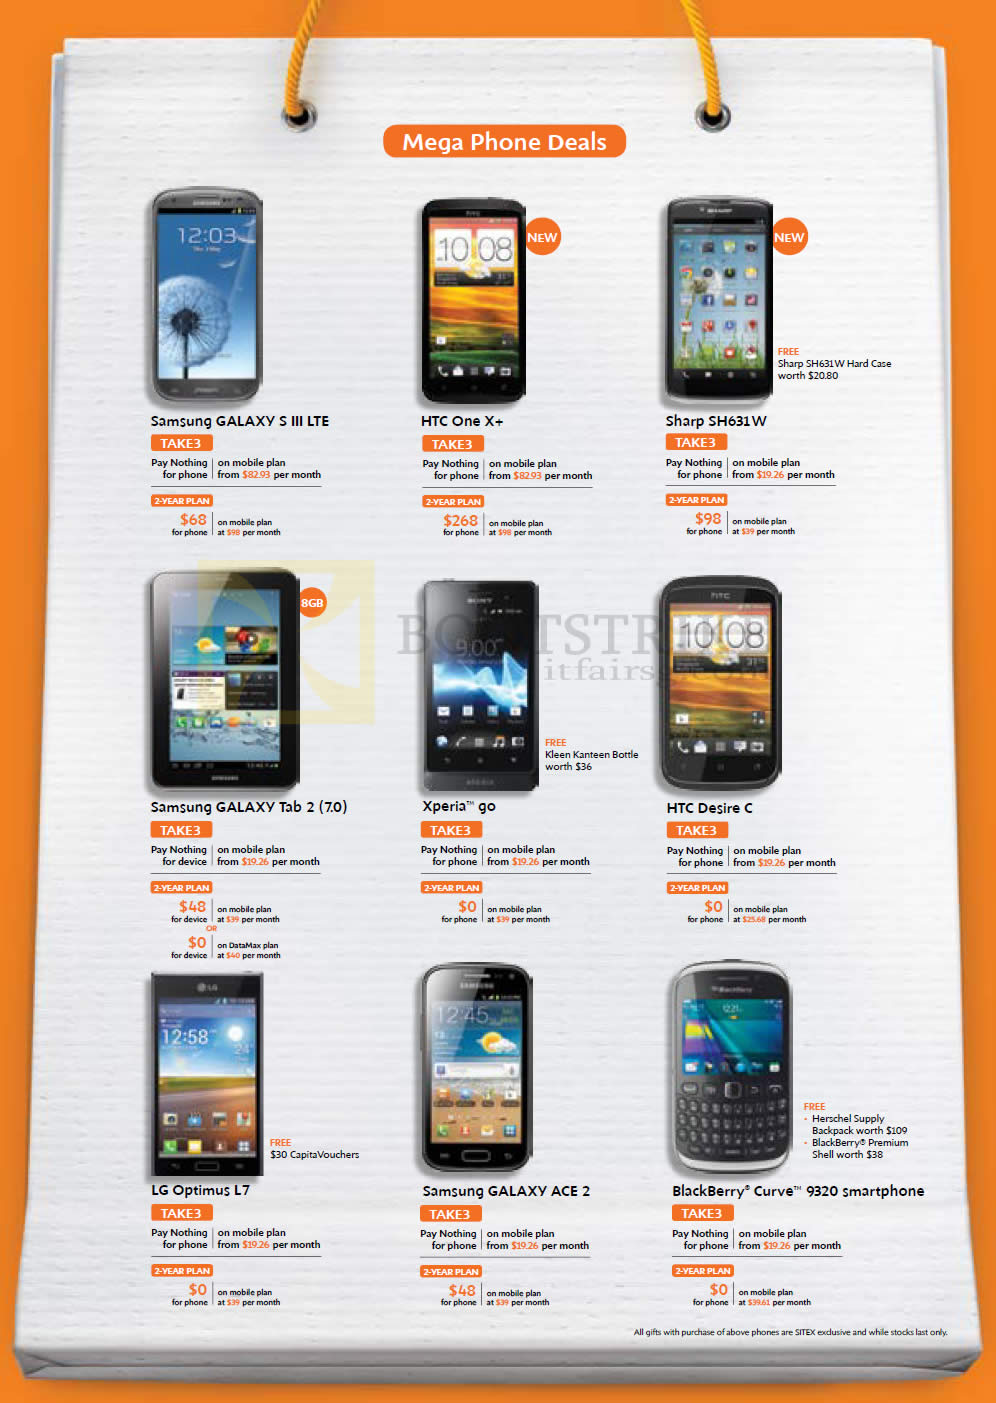 SITEX 2012 price list image brochure of M1 Mobile Phones Samsung Galaxy S III LTE, Tab 2 7.0, Ace 2, HTC One X Plus, Desire C, Sharp SH631W, Sony Xperia Go, LG Optimus L7, Blackberry Curve 9320